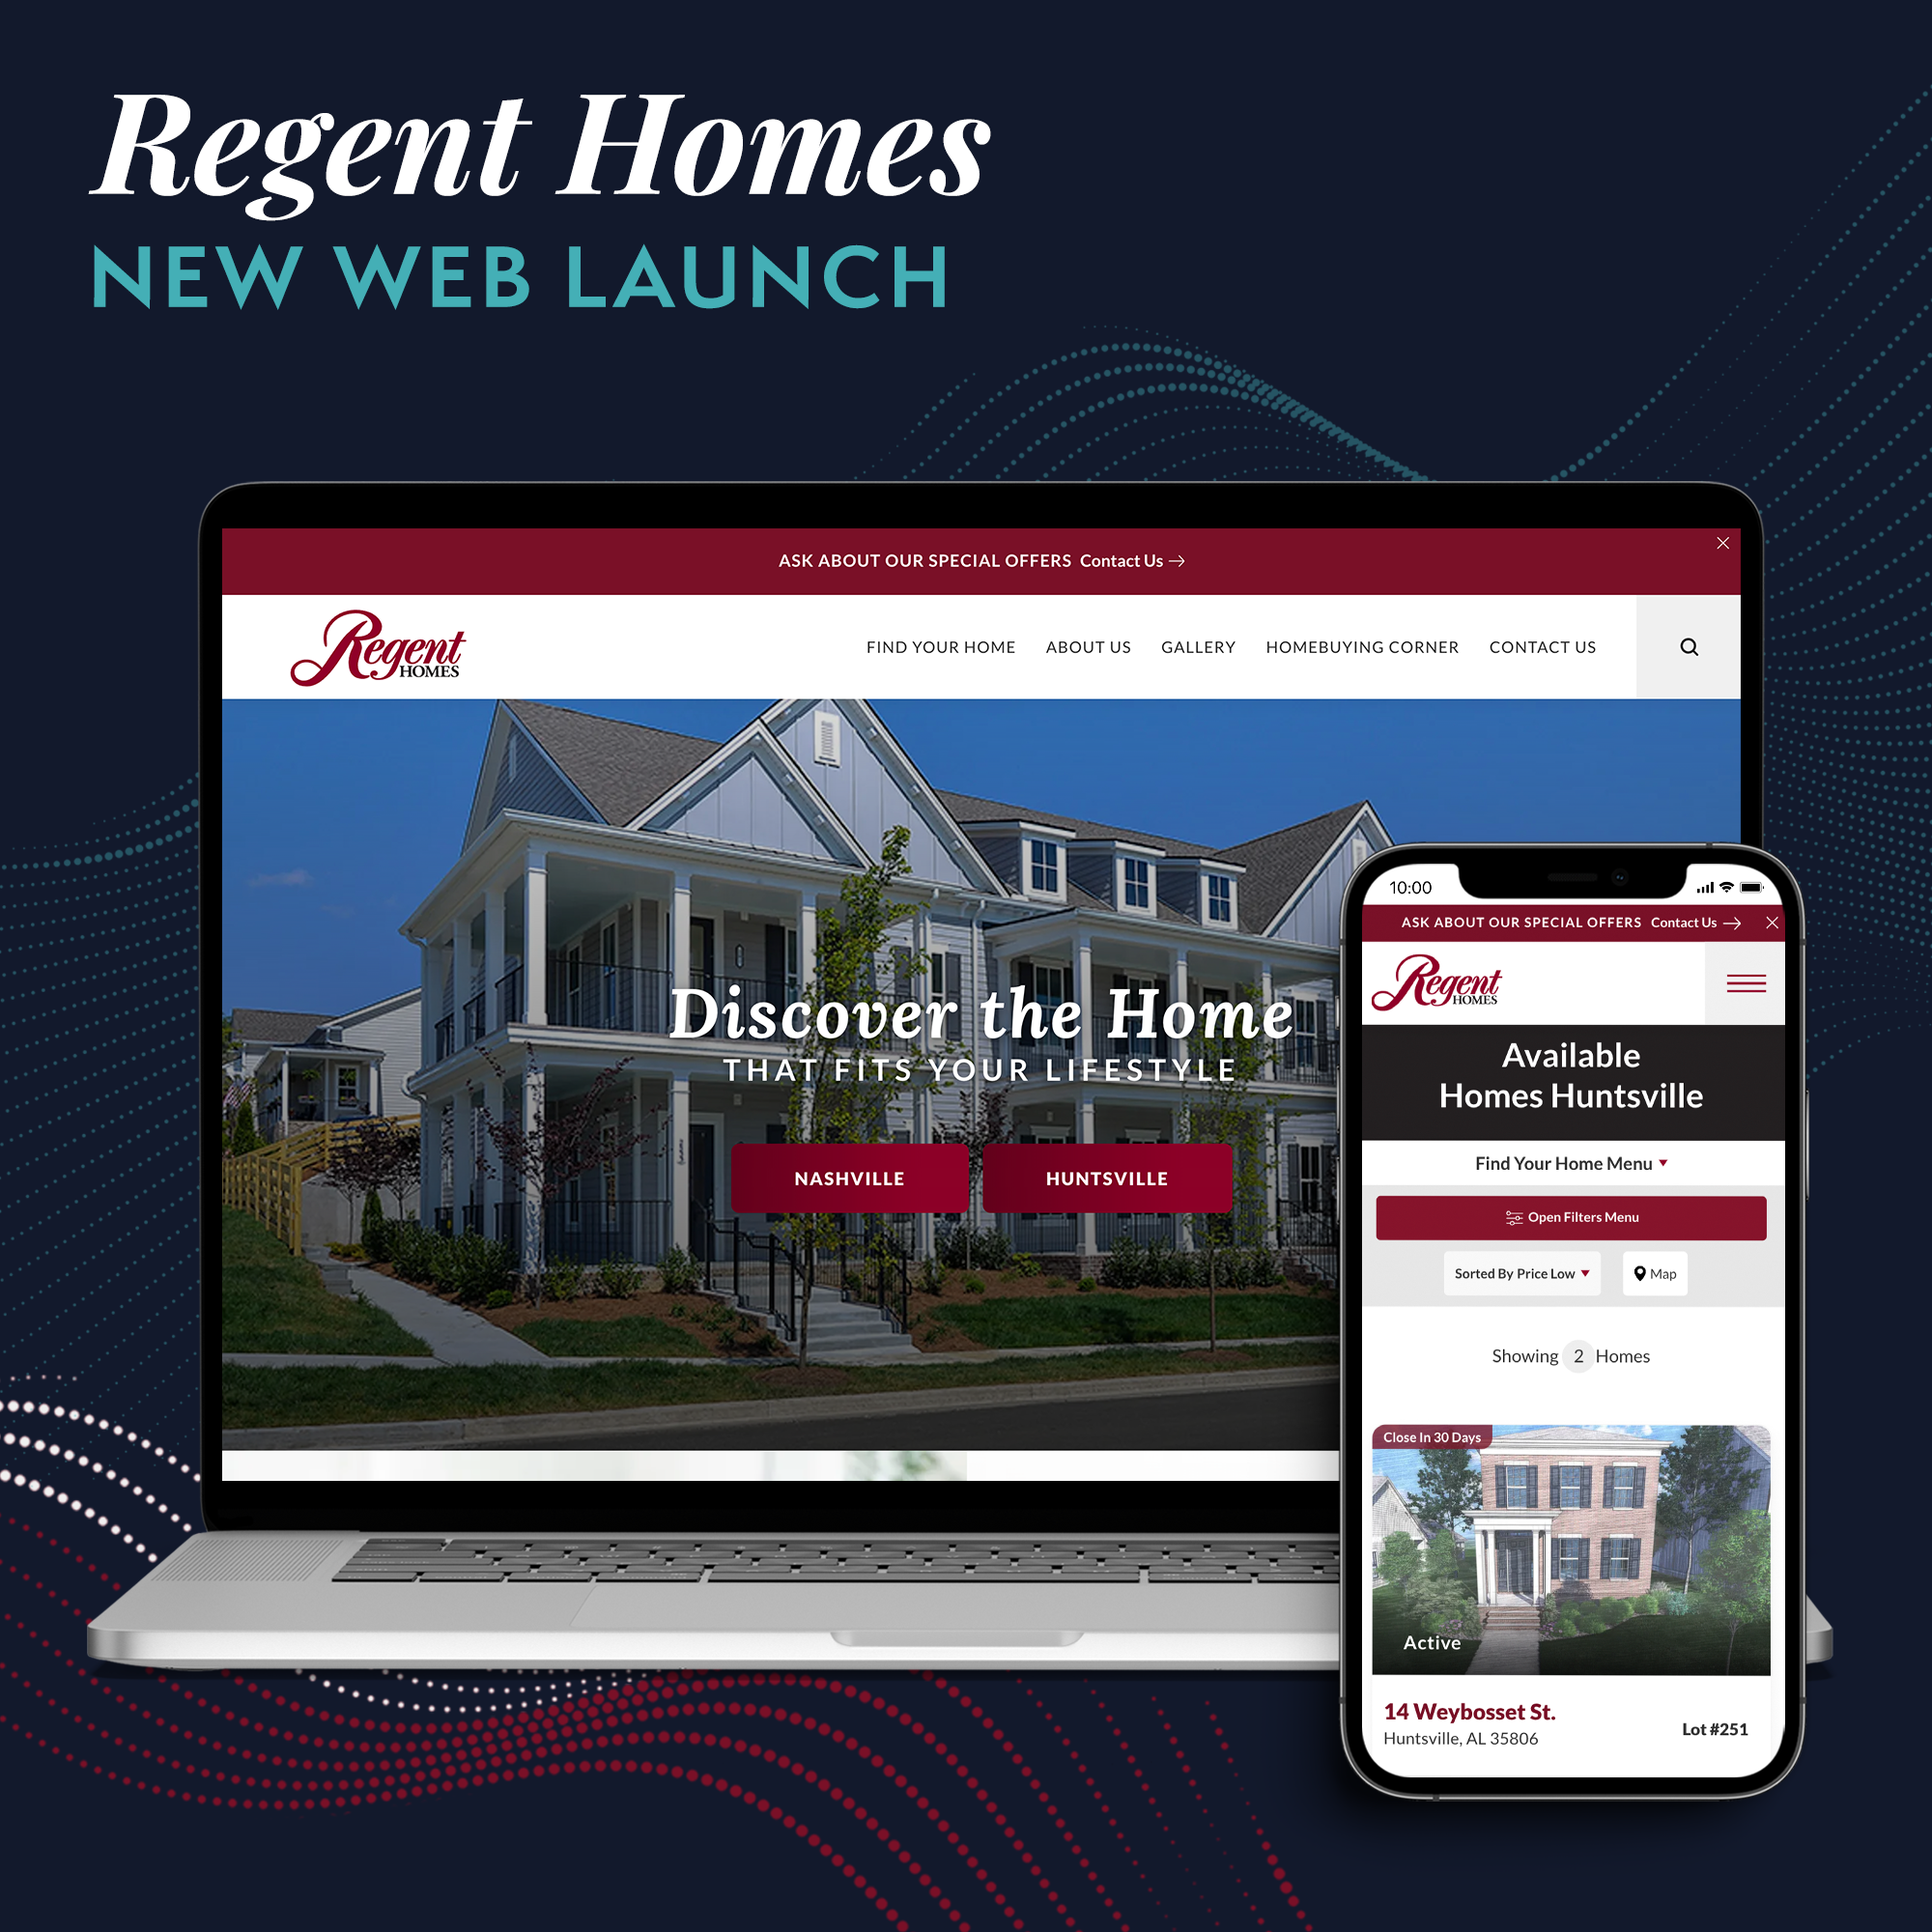 New Web Launch: Regent Homes